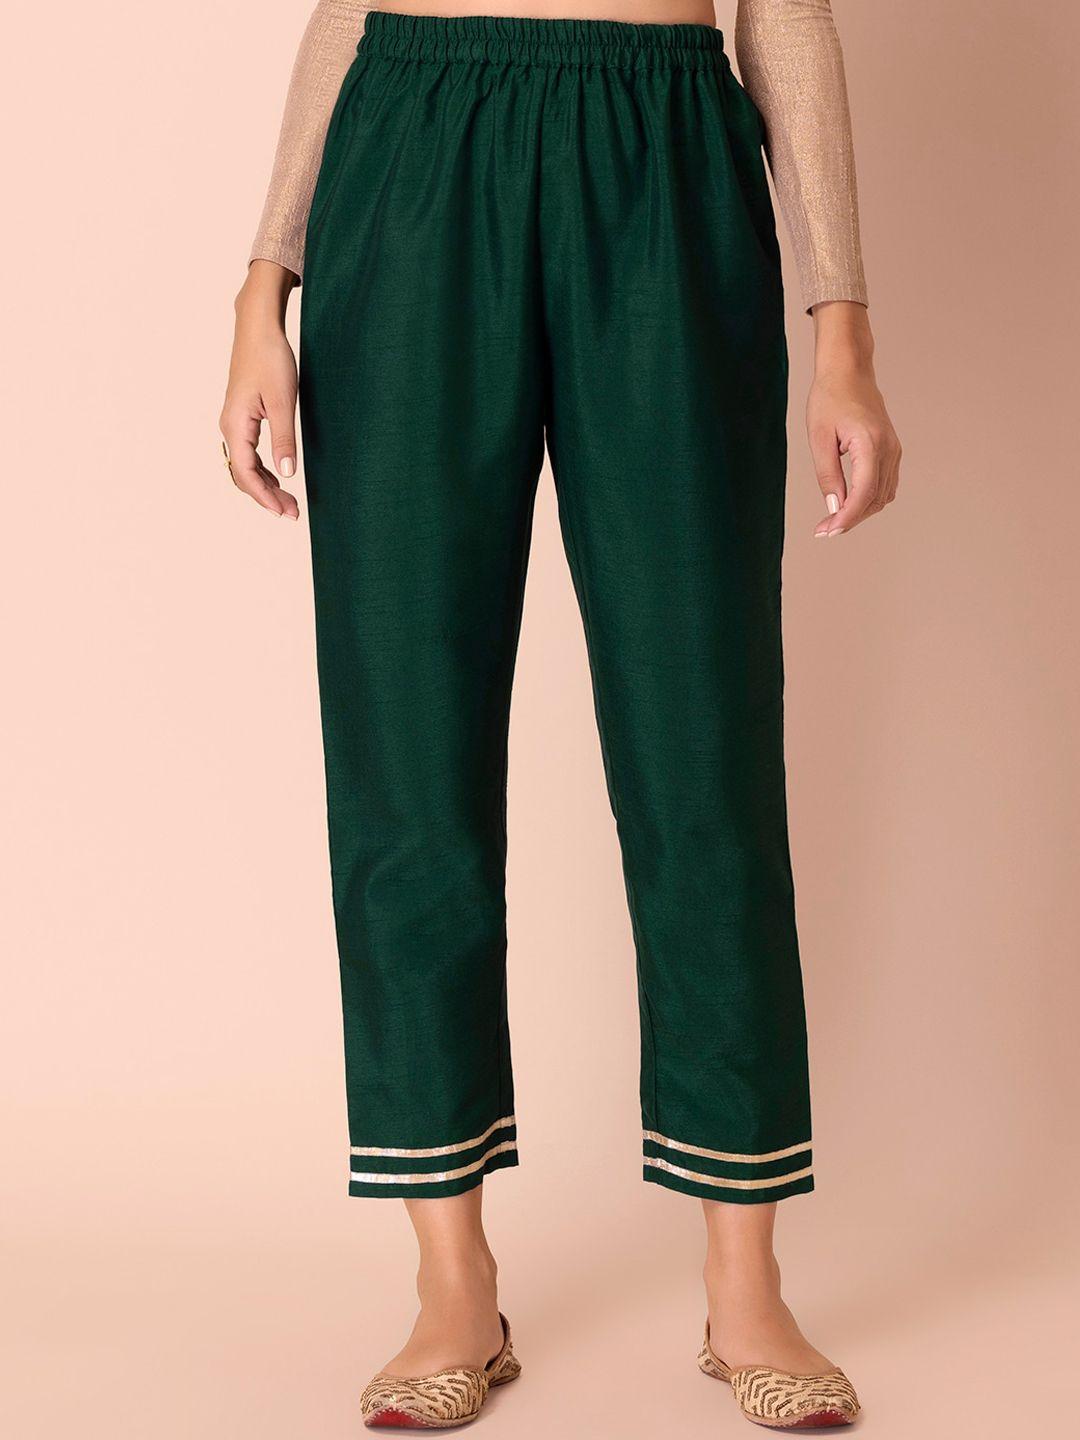 indya-women-green-trousers